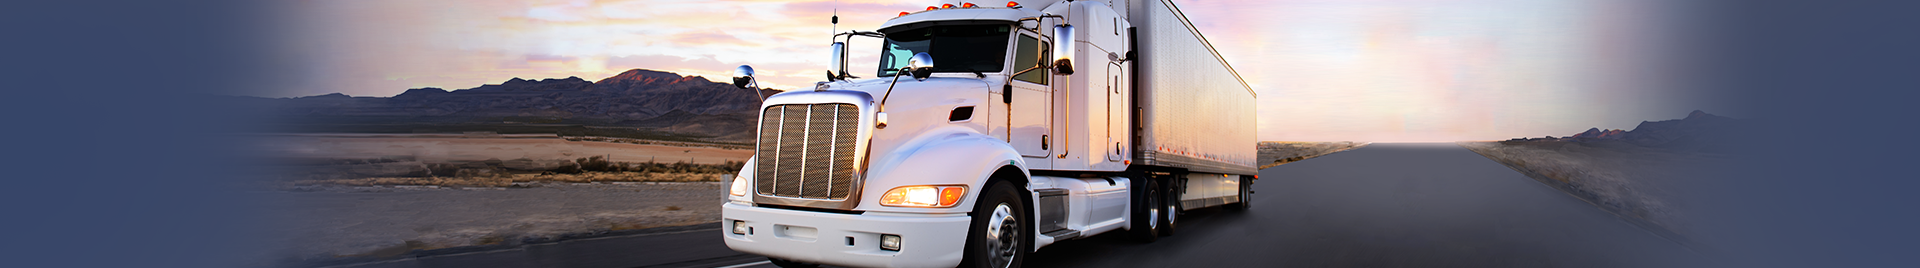 truck heavy equipment claims